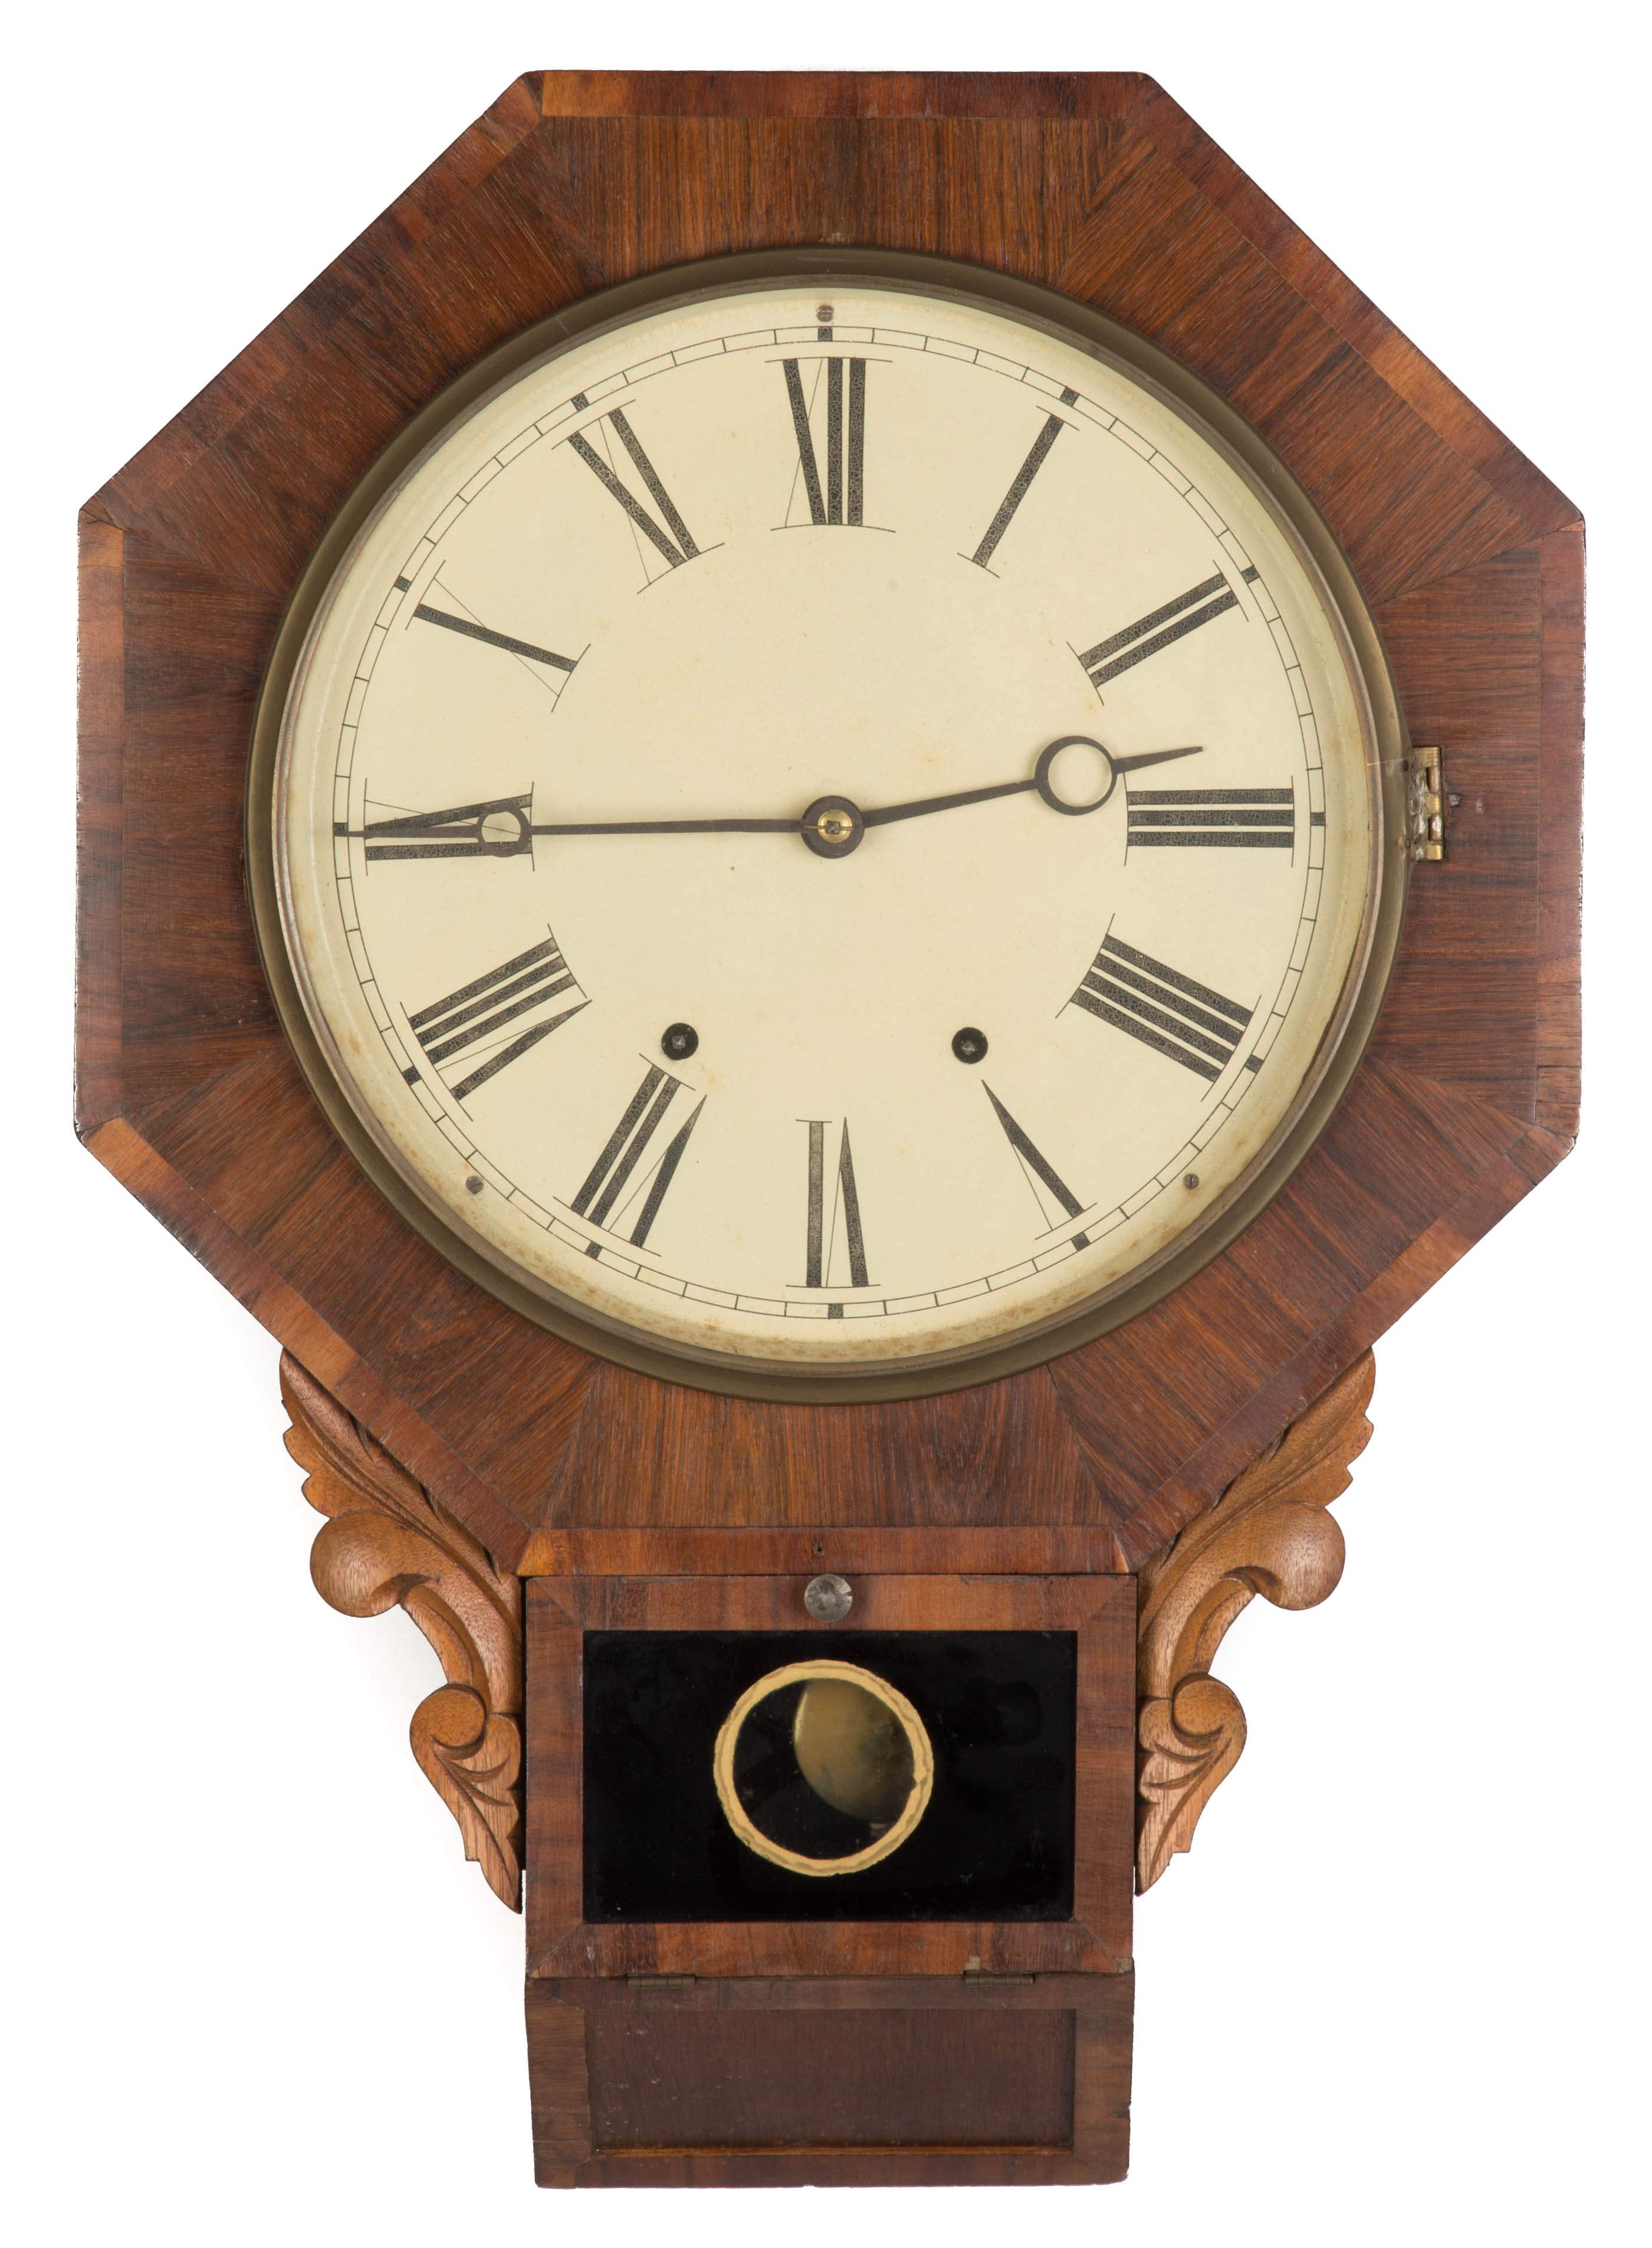 Two Schoolhouse Clocks Cottone Auctions